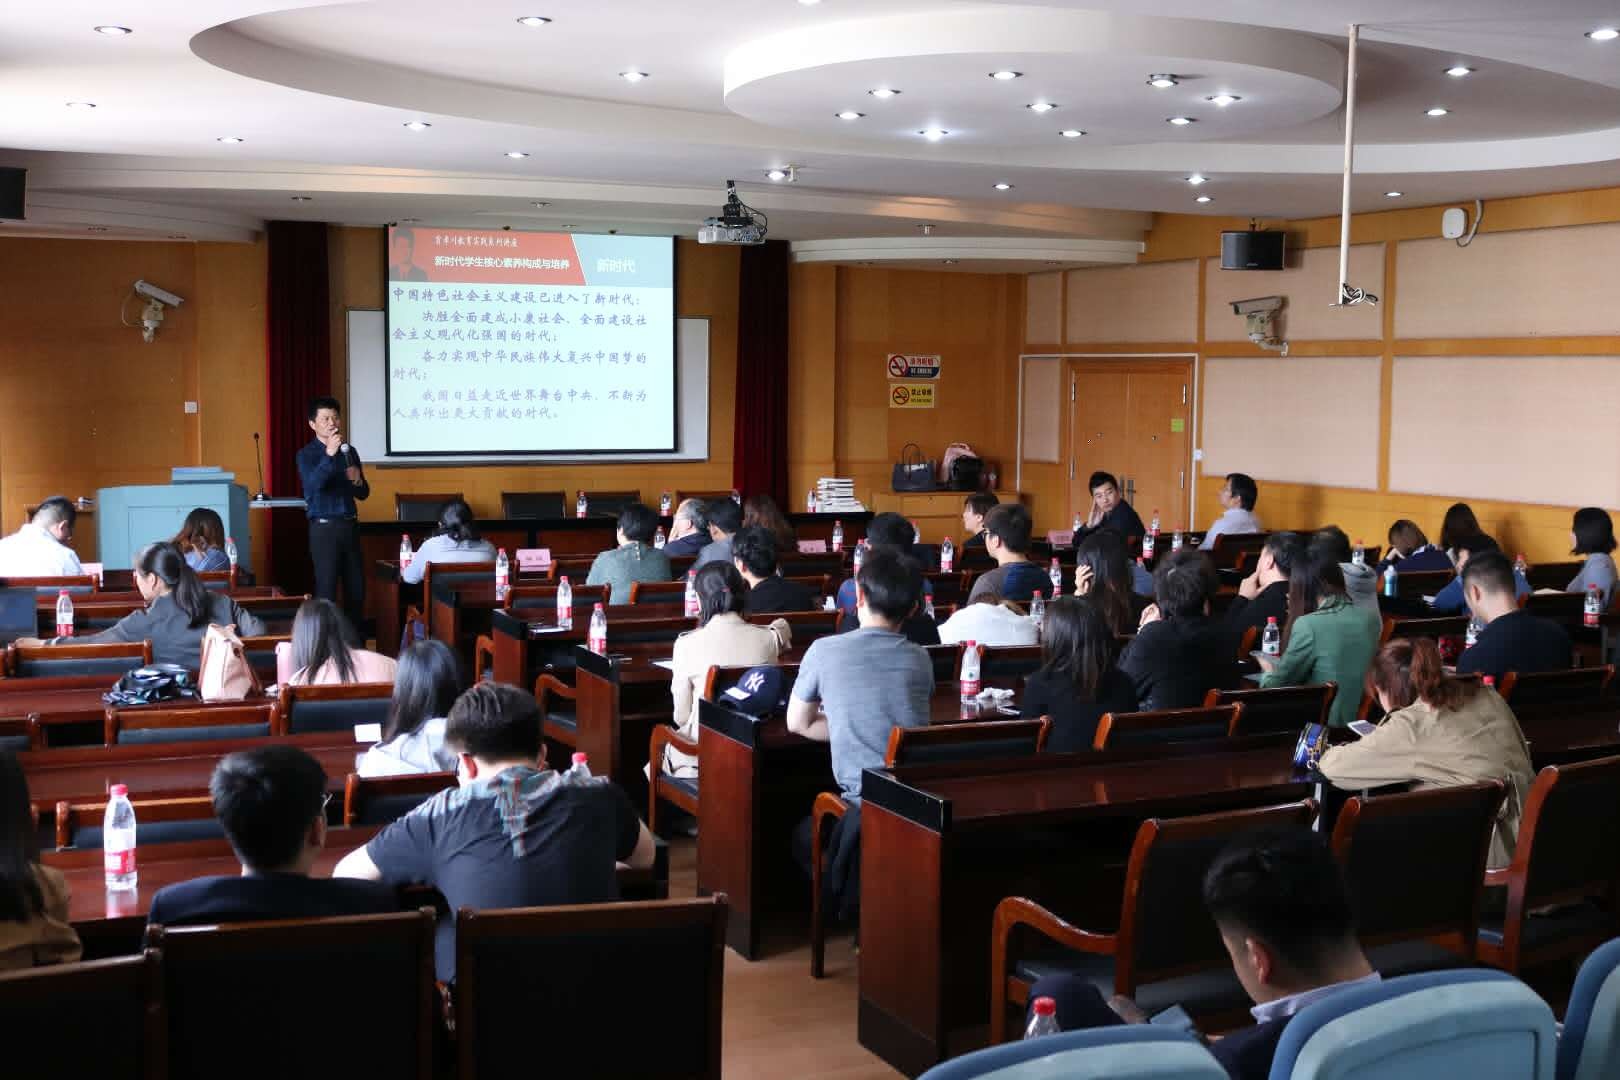 Columbia Alumni Forum and Gathering Event in Zhejiang